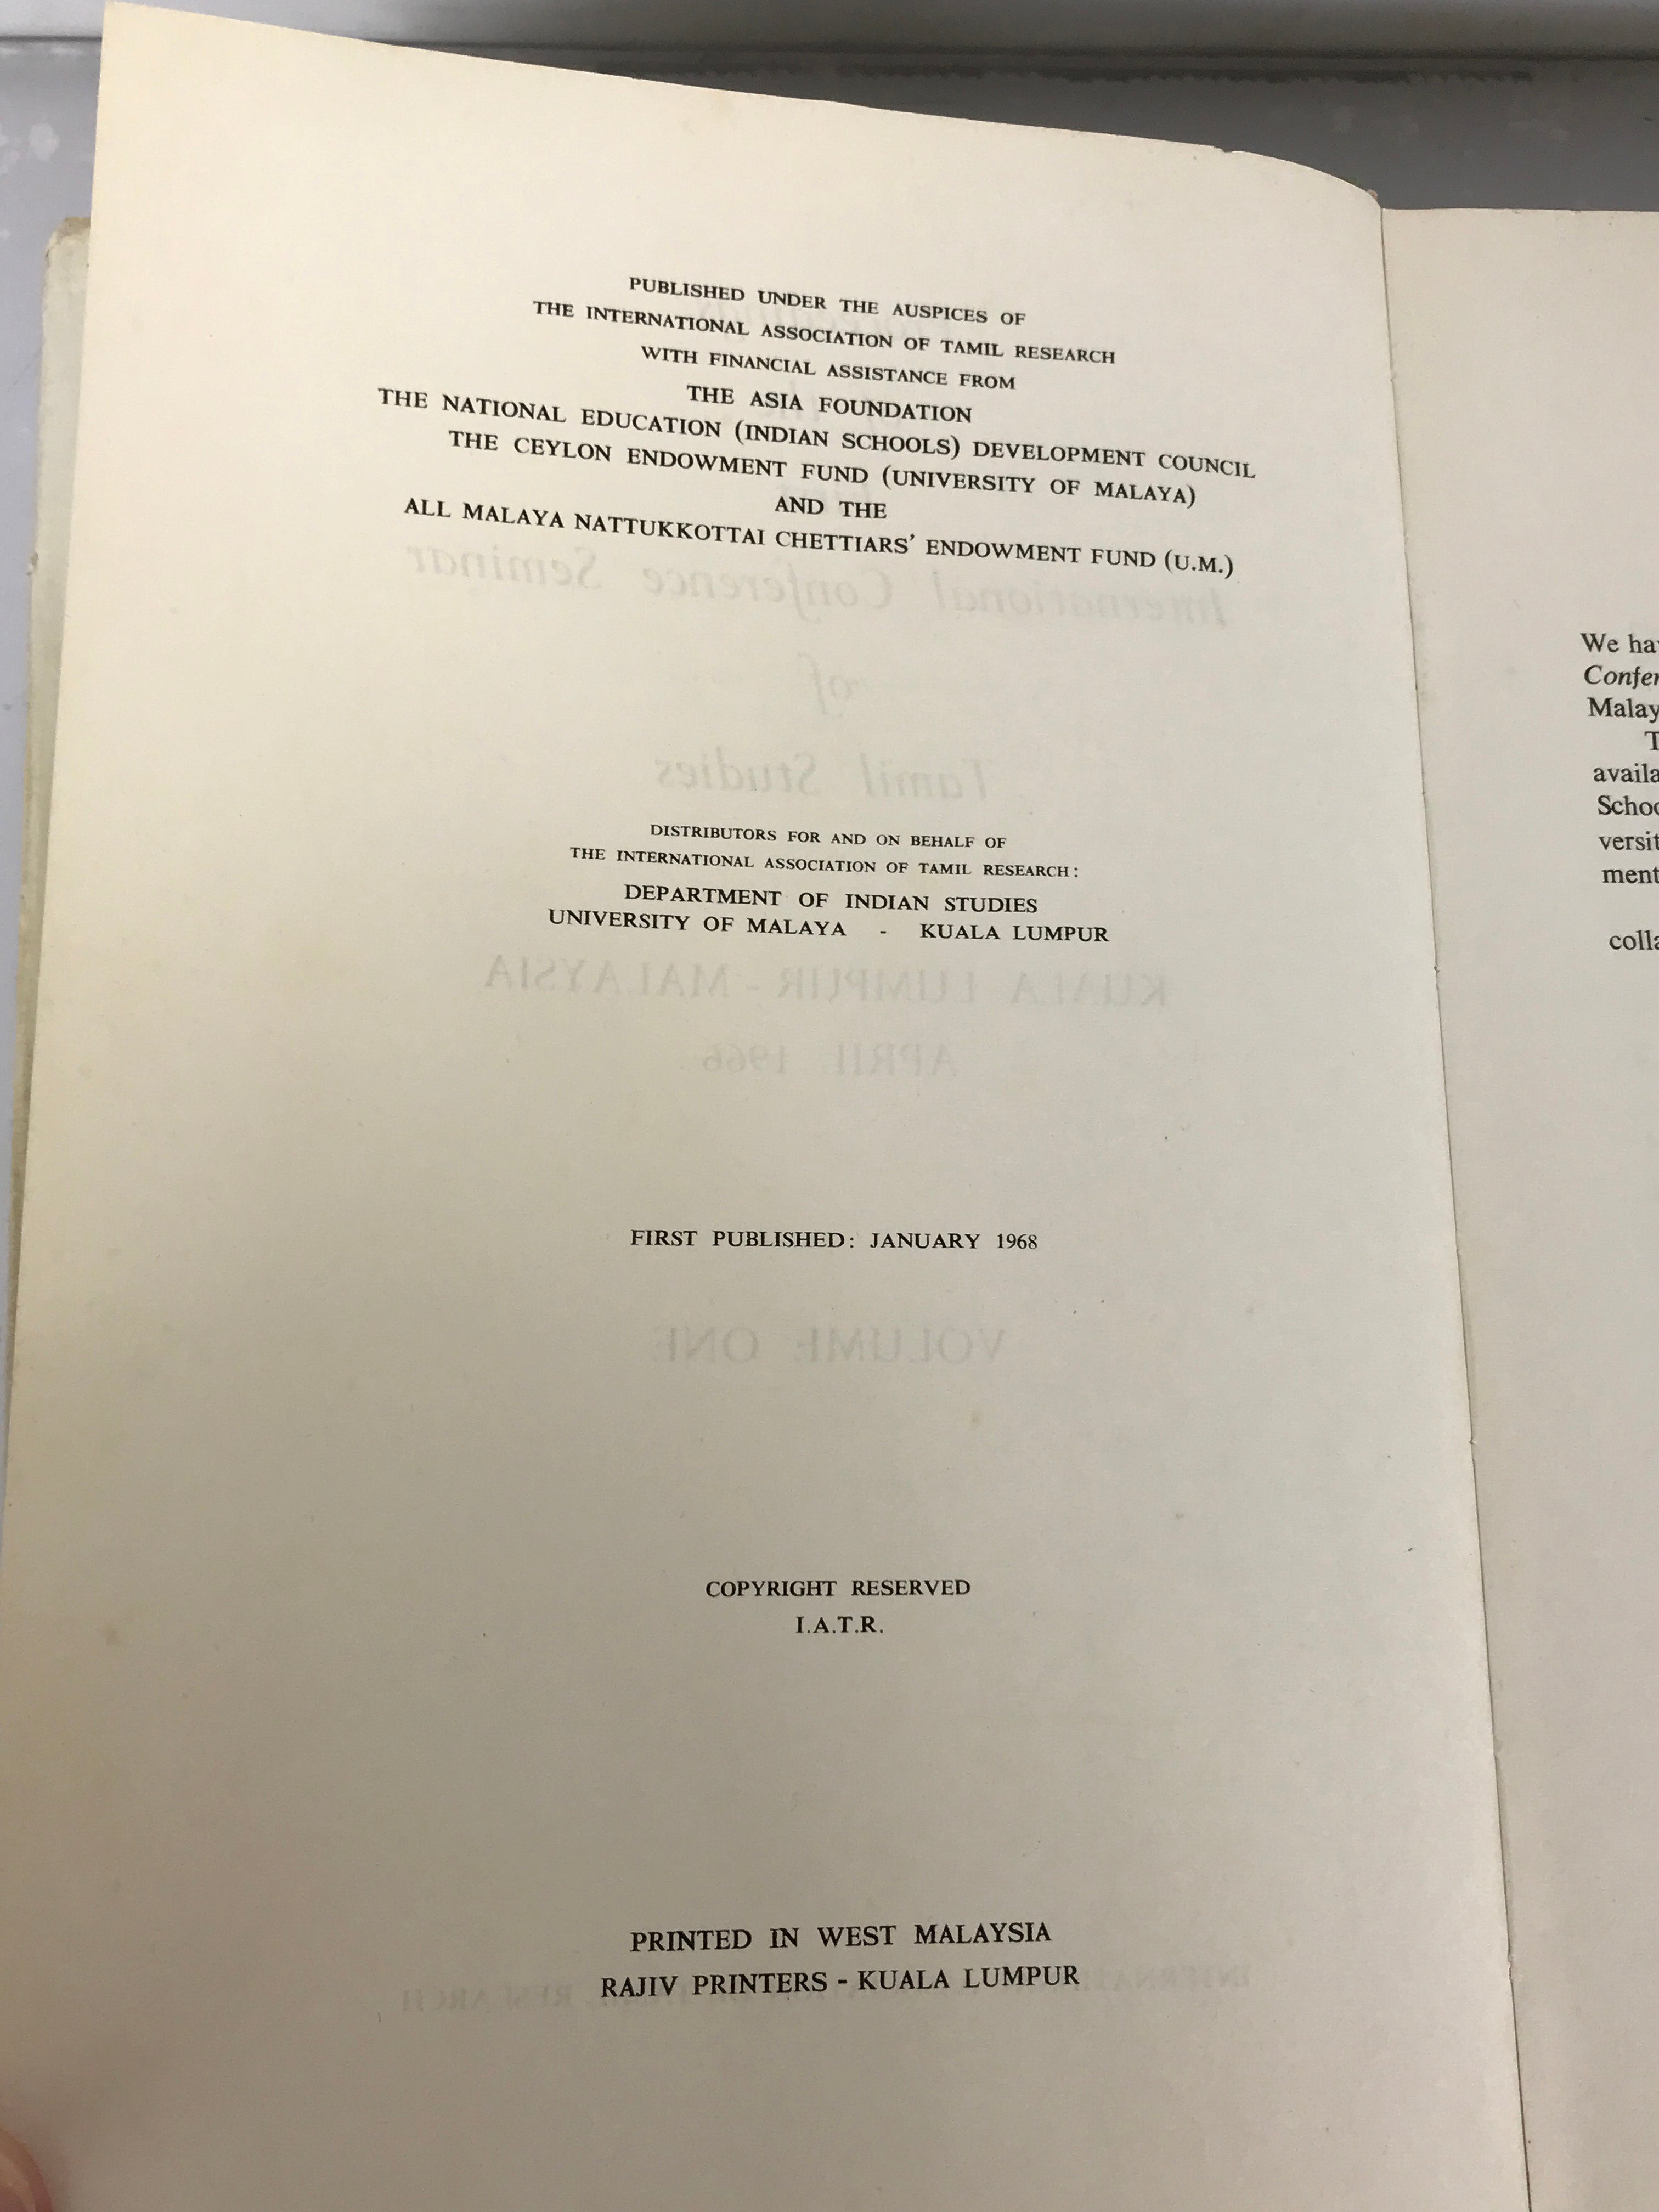 Proceedings of the First International Conference Seminar of Tamil Studies (2 Vols) 1968-1969 HC DJ